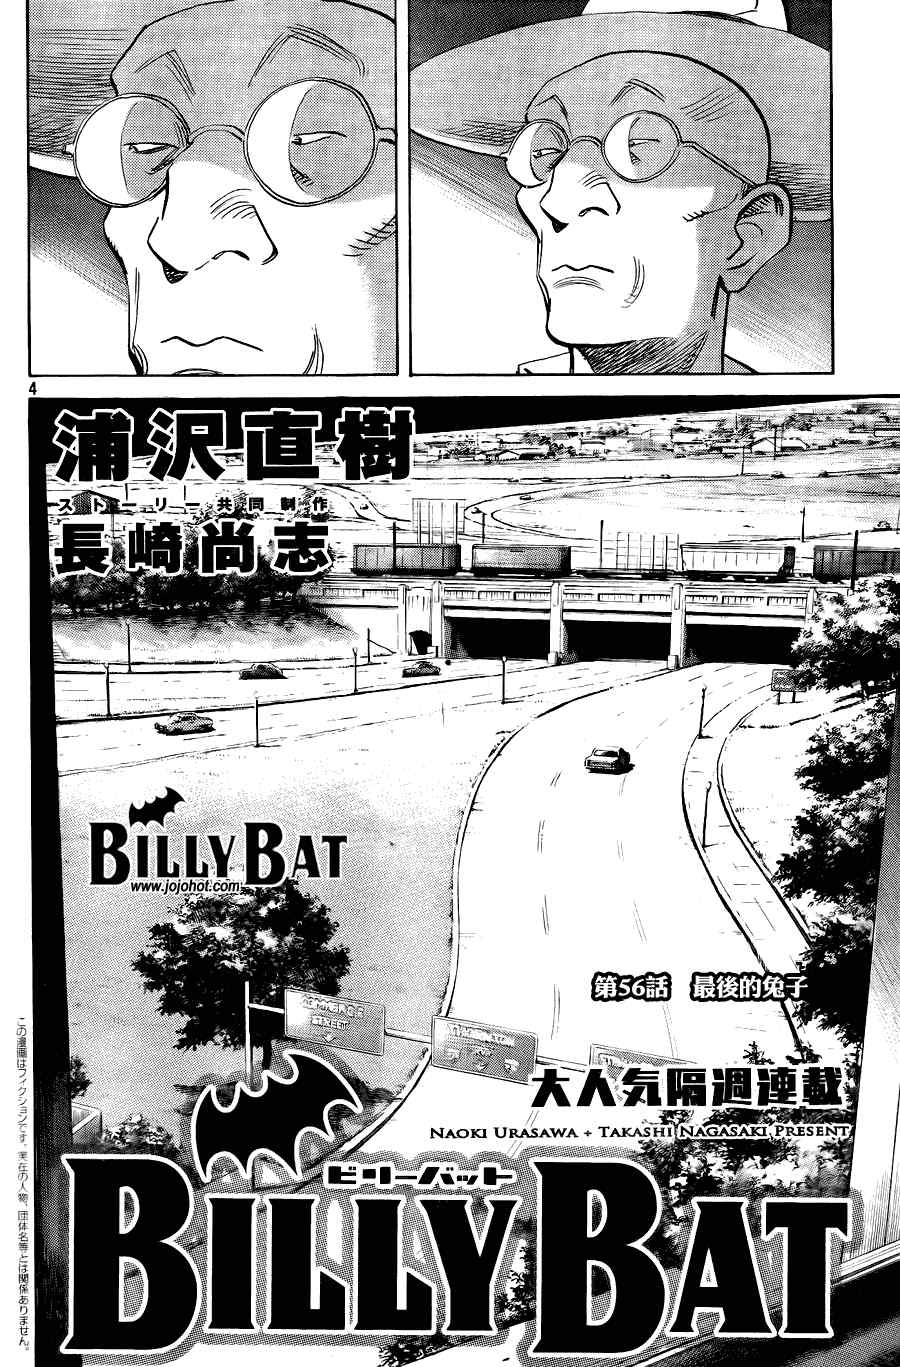 Billy_Bat-第56话全彩韩漫标签